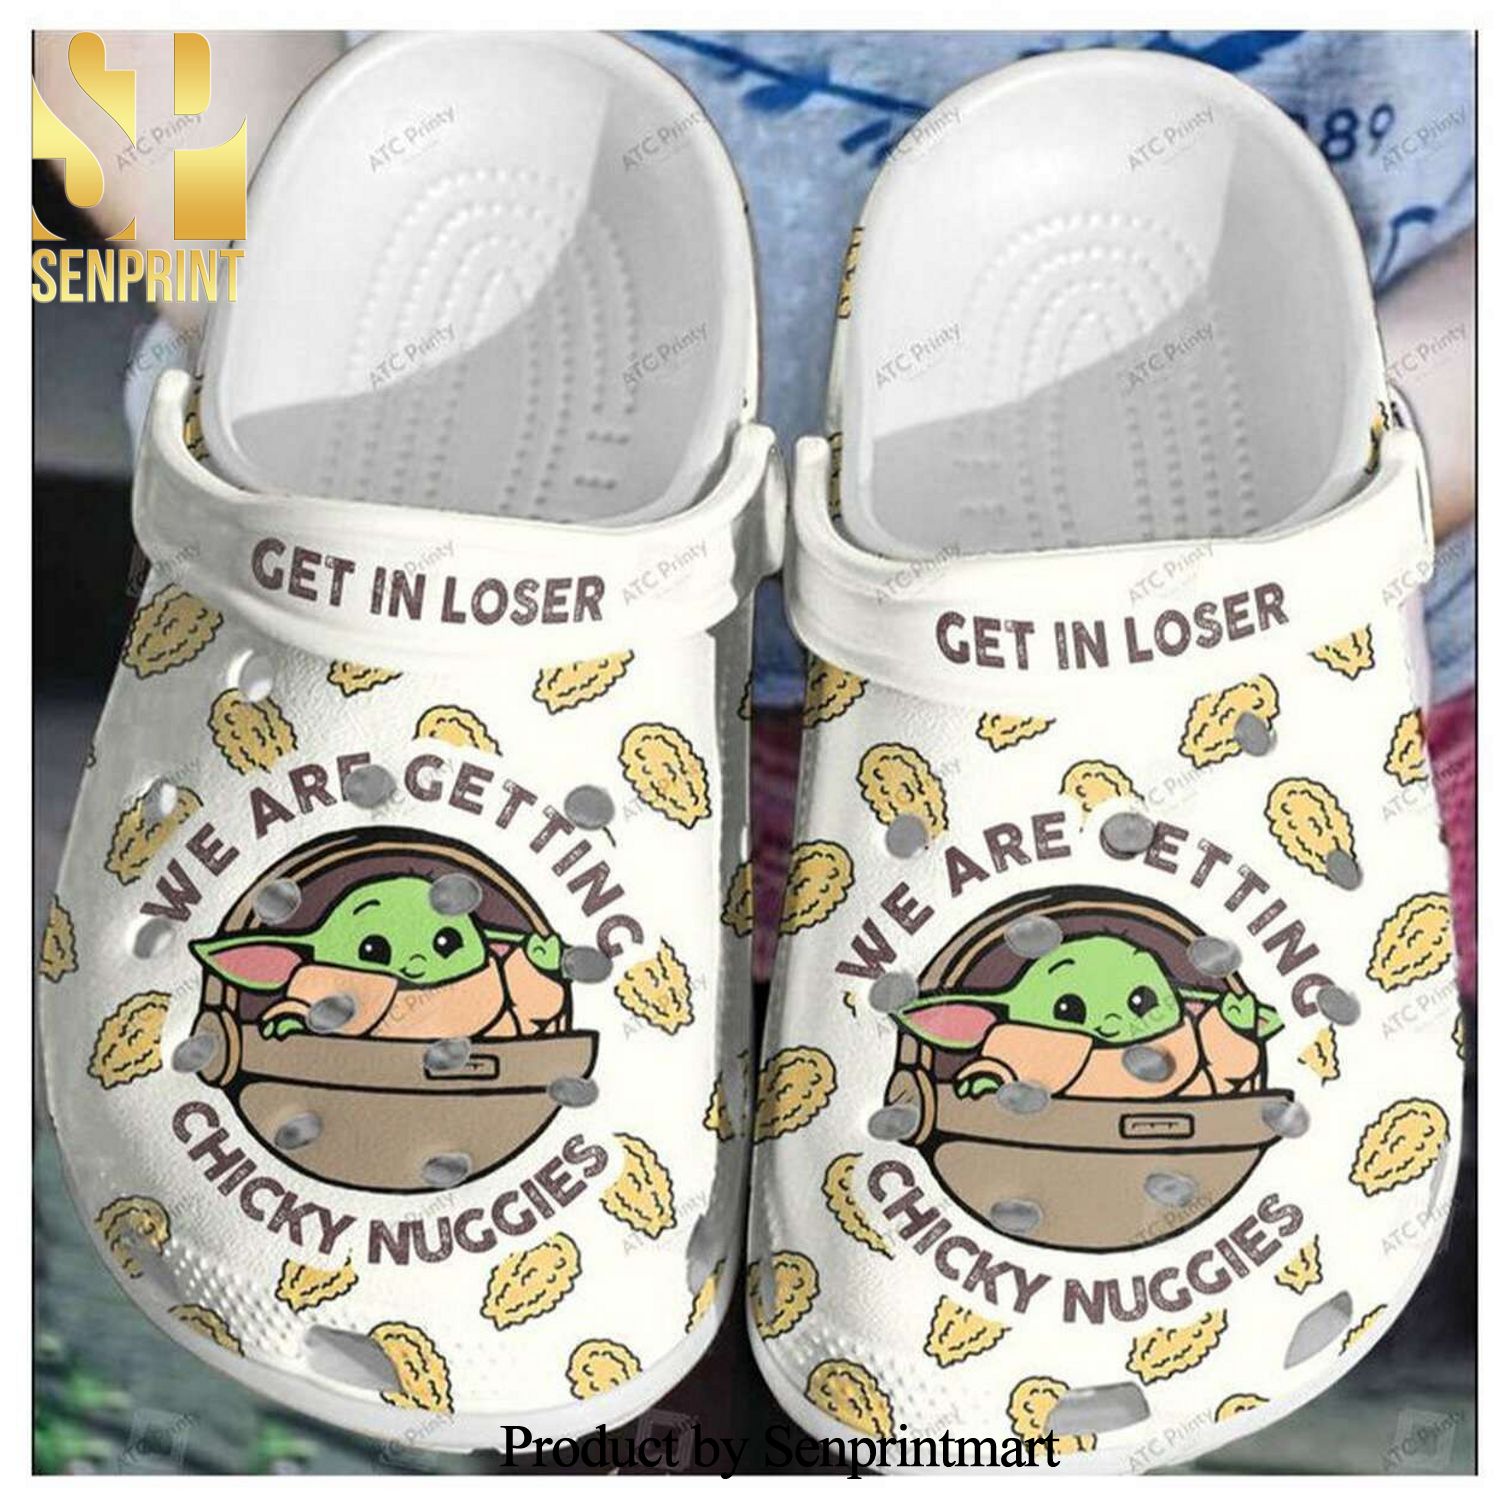 Special Yoda Chicky Nuggies Hypebeast Fashion Crocs Crocband Clog